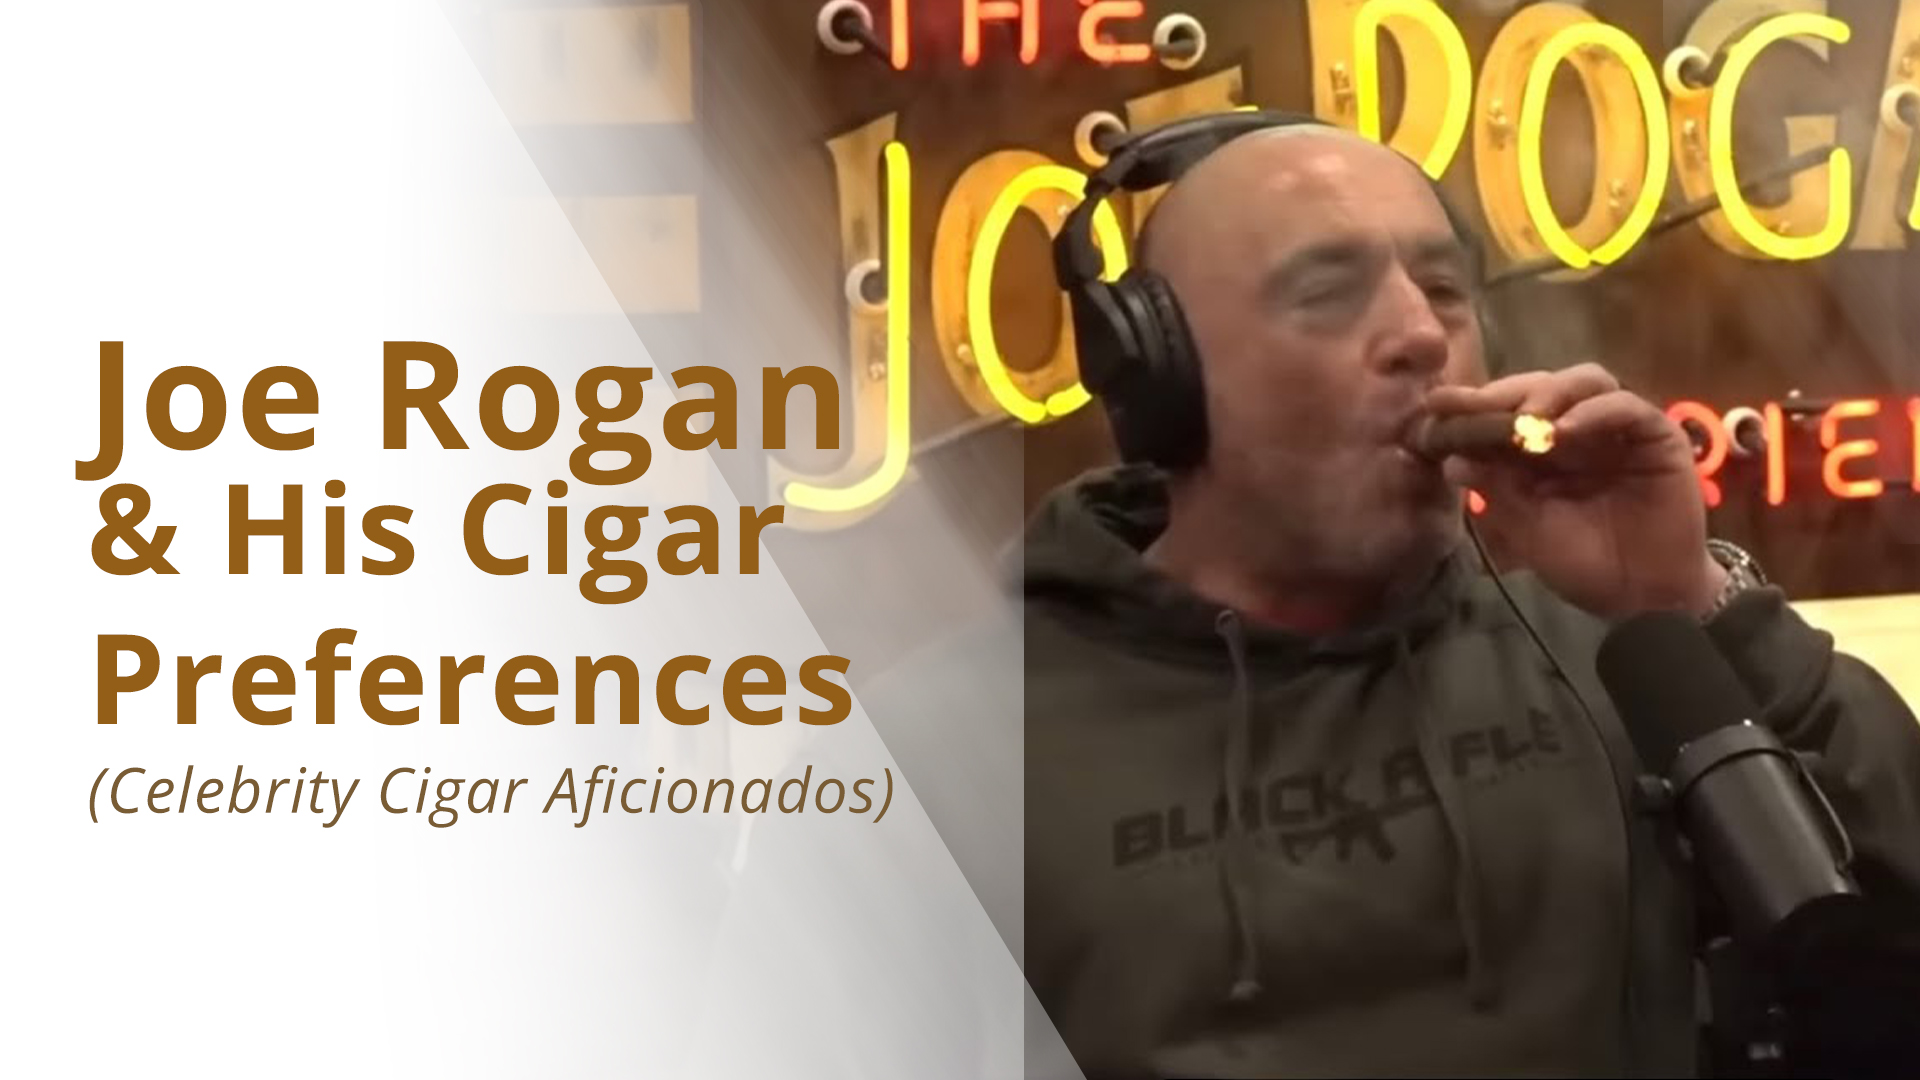 What cigars does Joe Rogan smoke